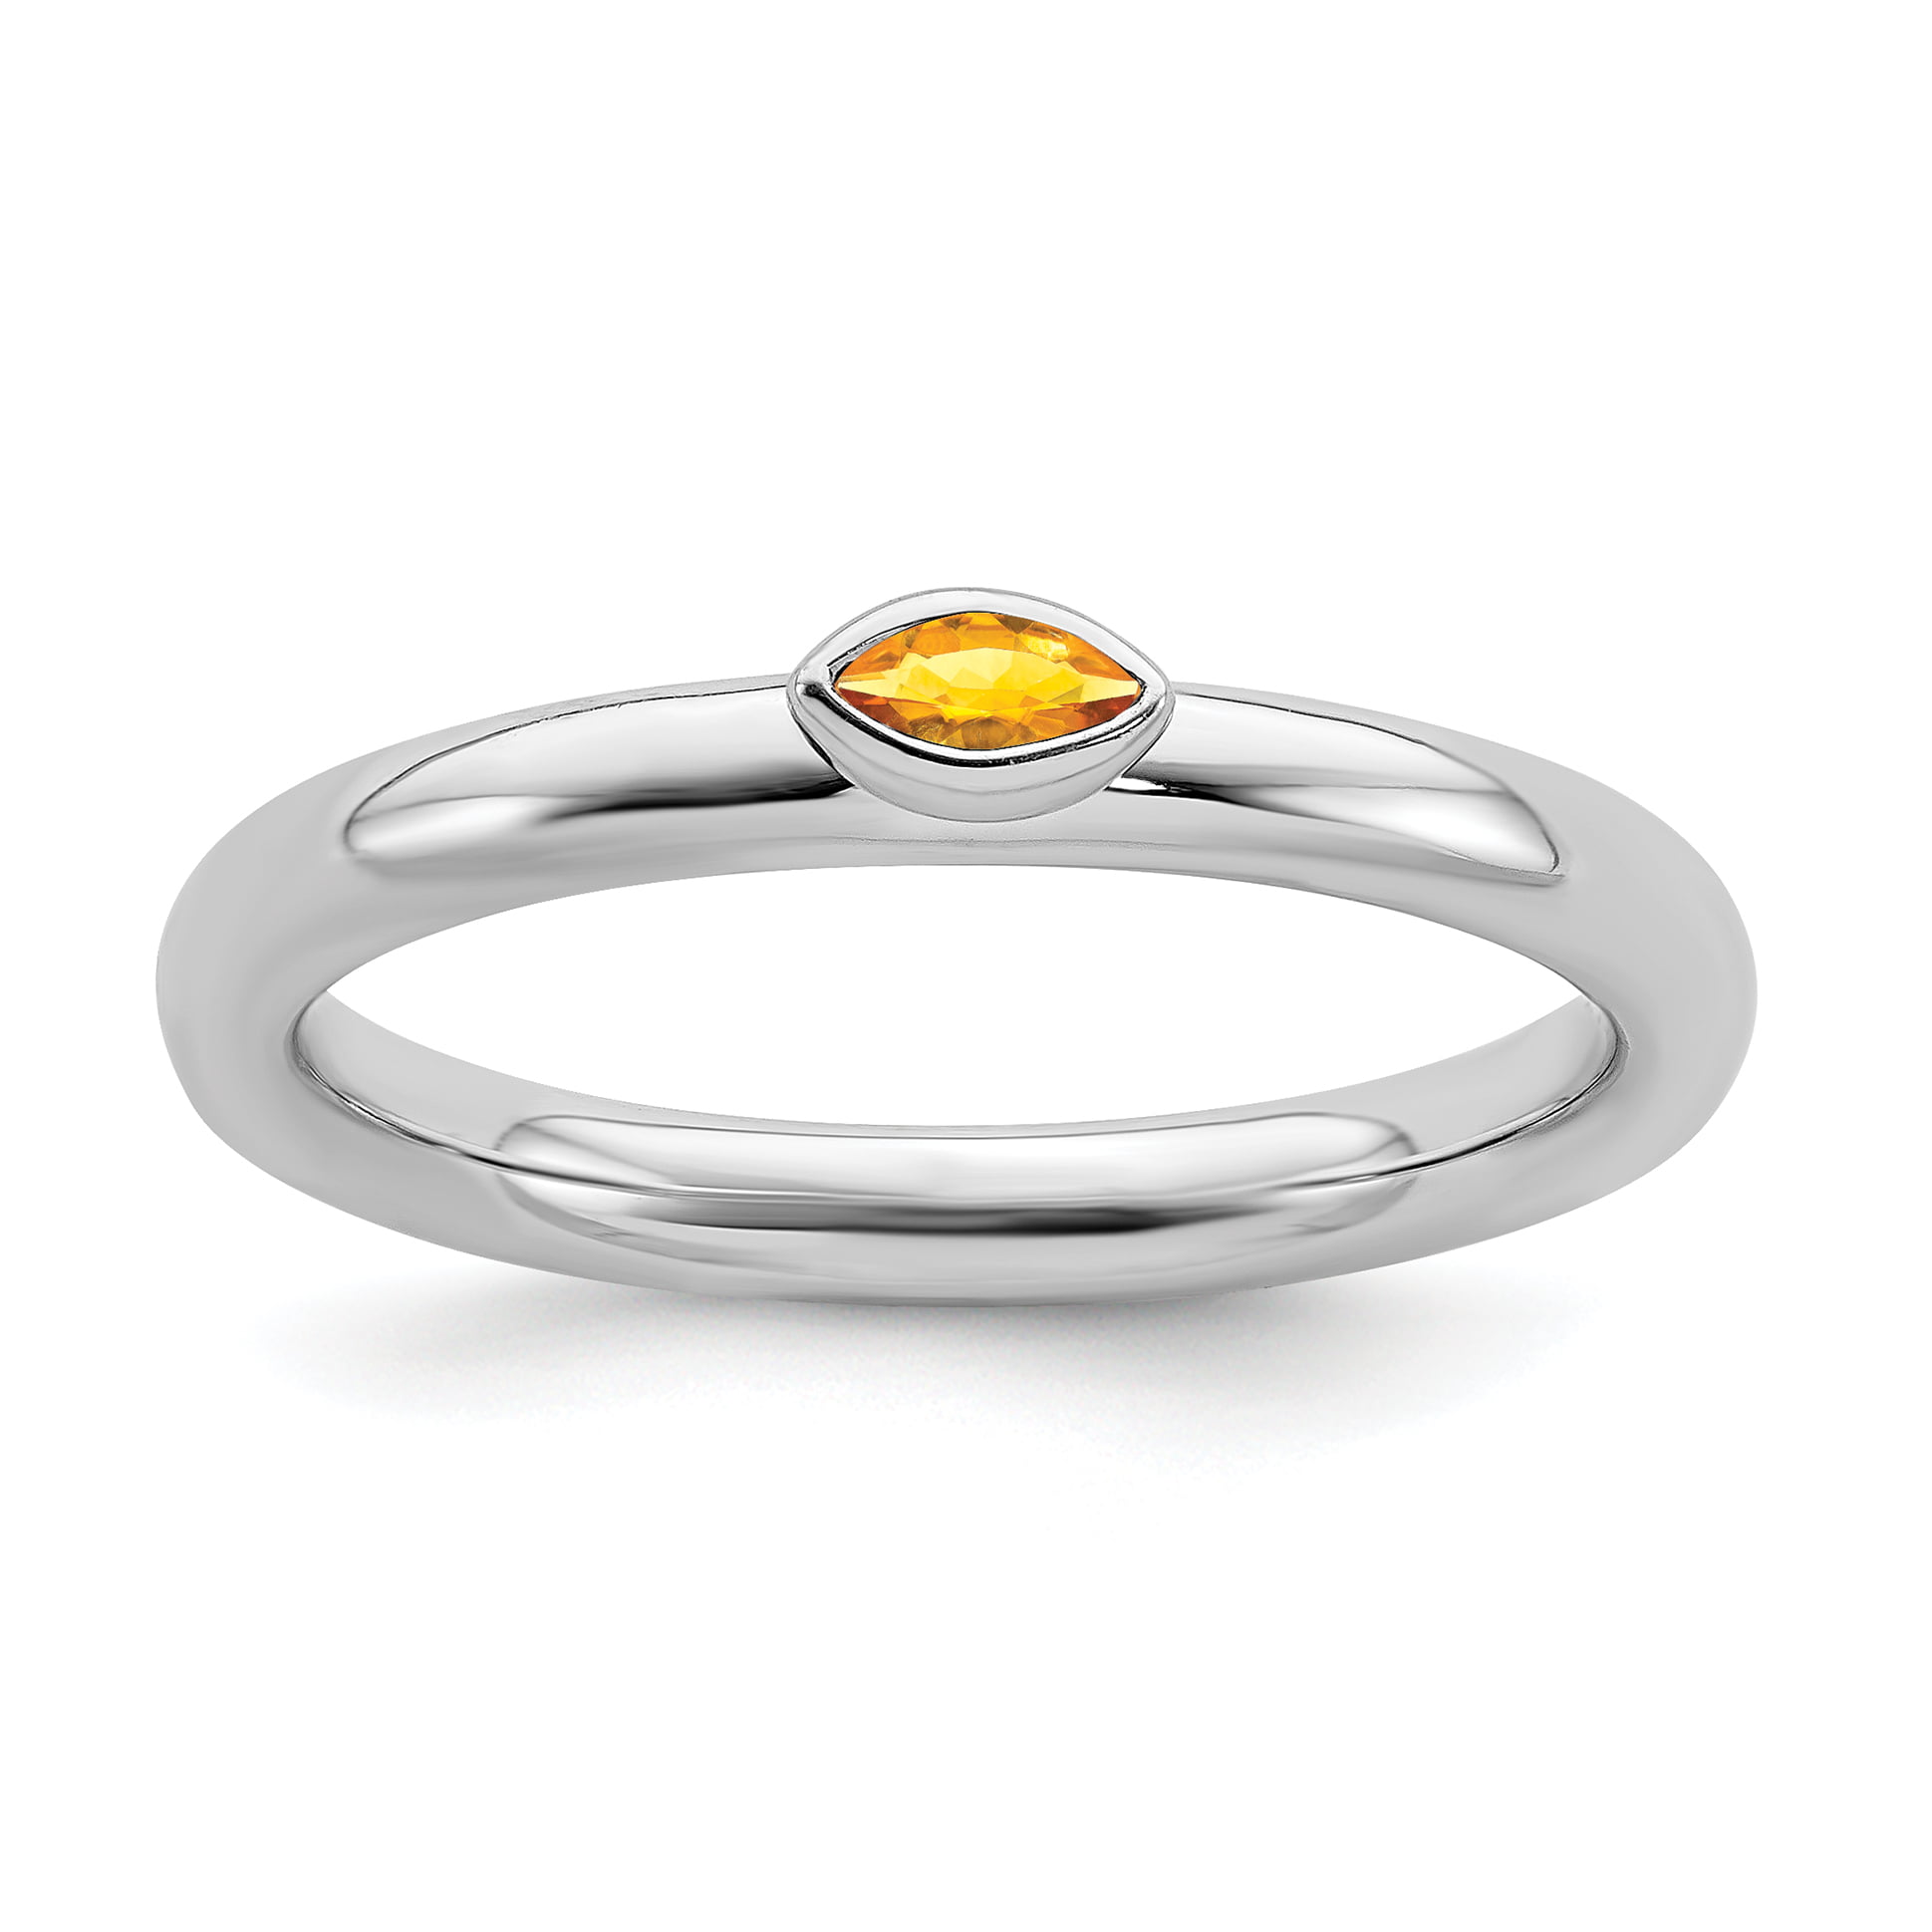 Pretty 925 Silver Jewelry Wedding Rings for Women Garnet & Citrine Size 6-10 